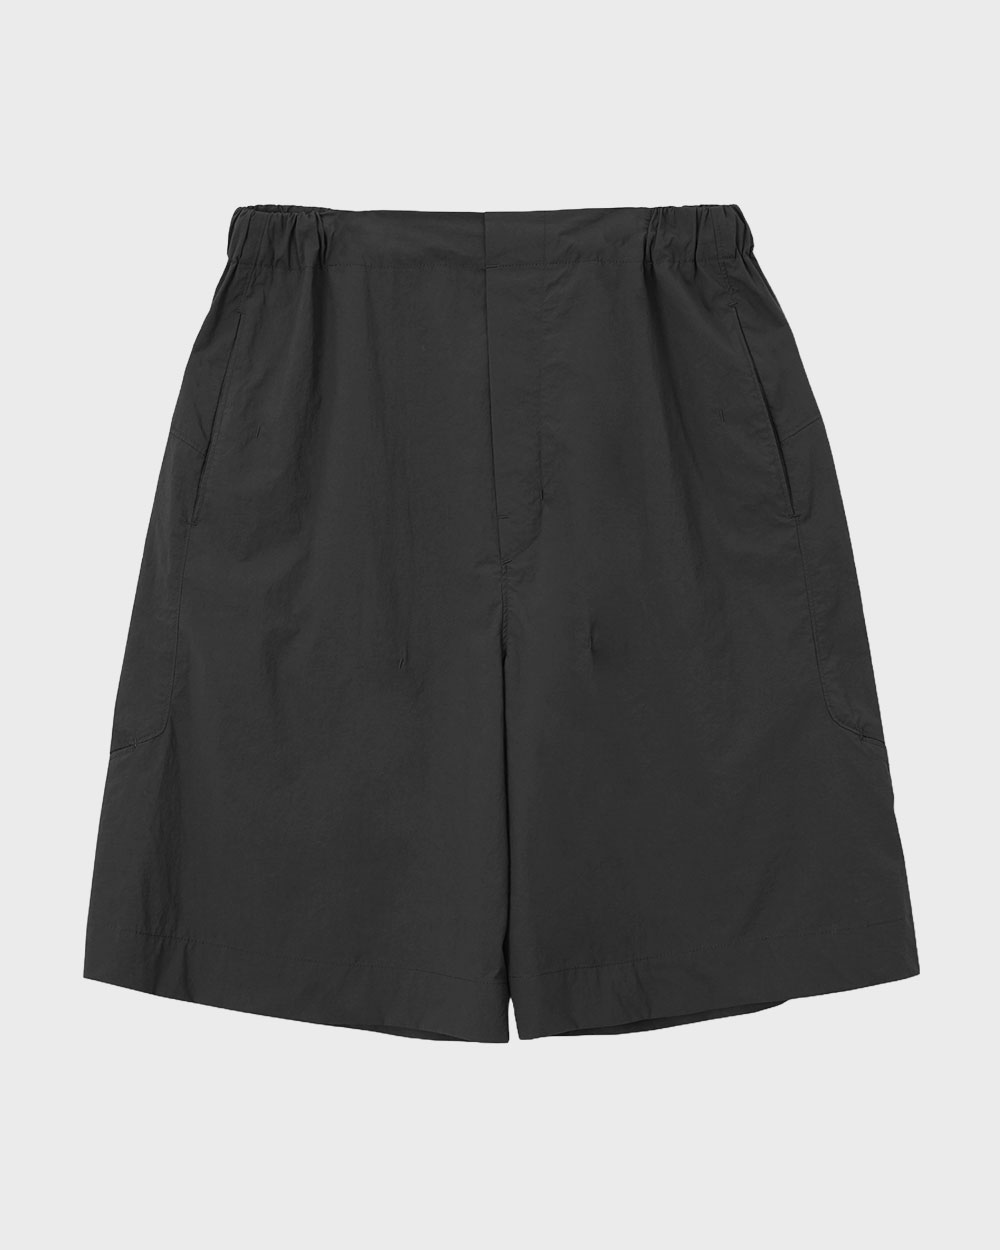 Nylon Cargo Shorts (Charcoal)